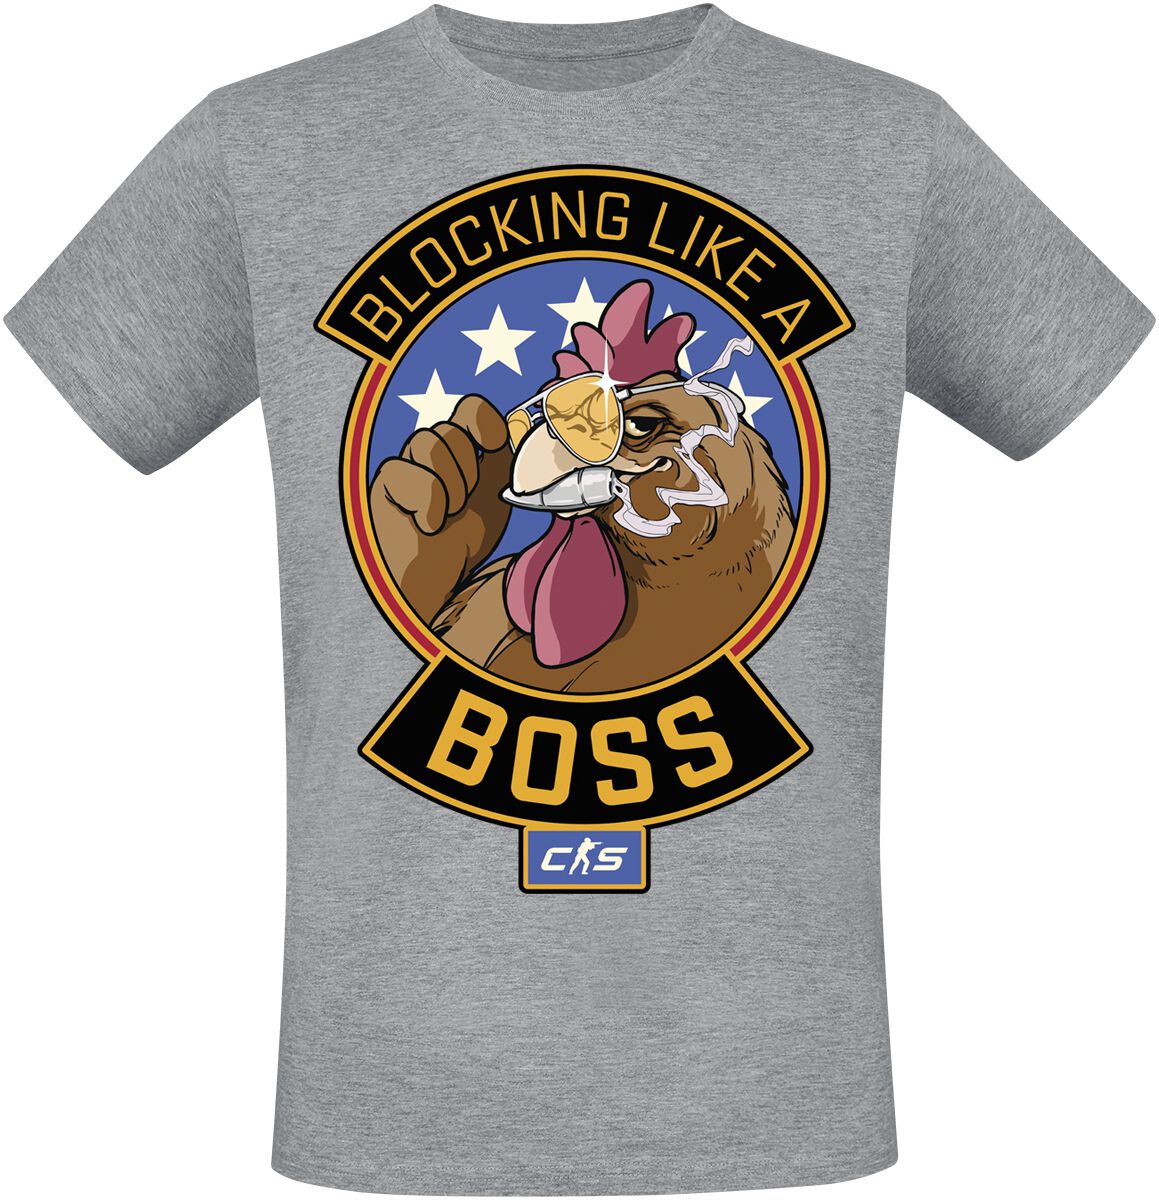 Counter-Strike - Gaming T-Shirt - 2 - Blocking Like A Boss - S bis XXL - für Männer - Größe XL - grau meliert  - EMP exklusives Merchandise!